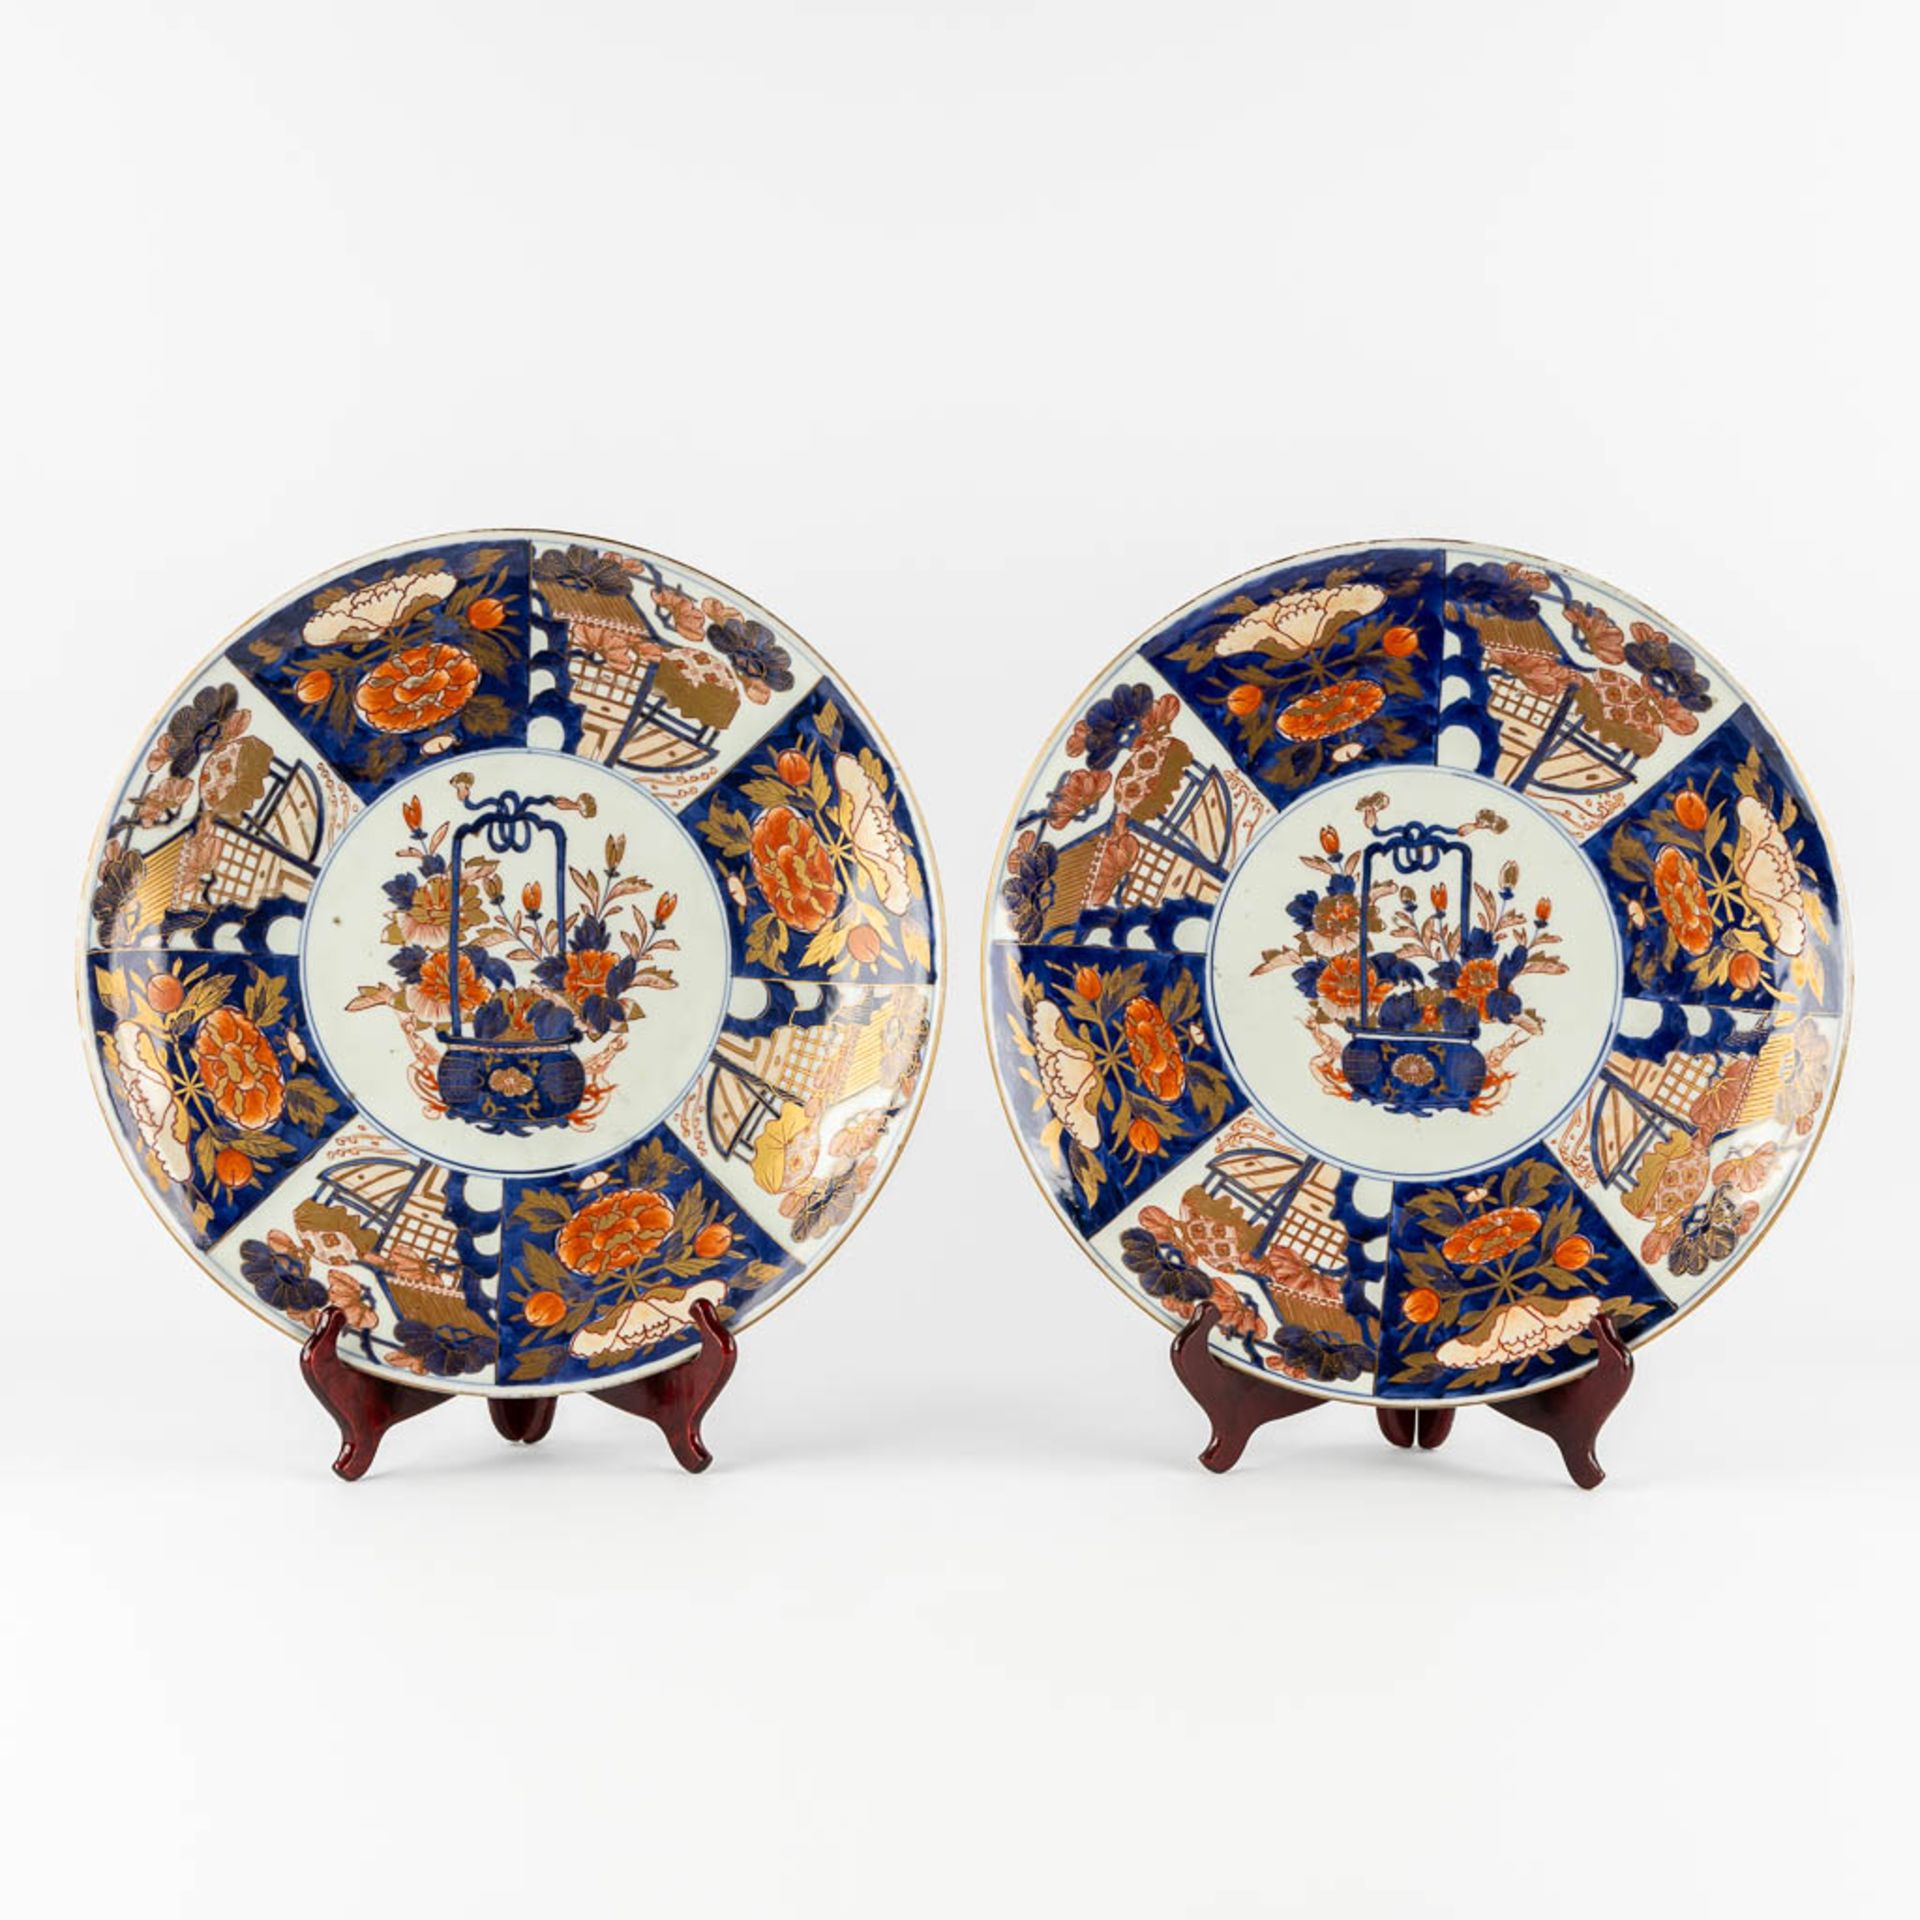 A pair of large Japanese Imari plates, 19th/20th C. (D:47 cm)